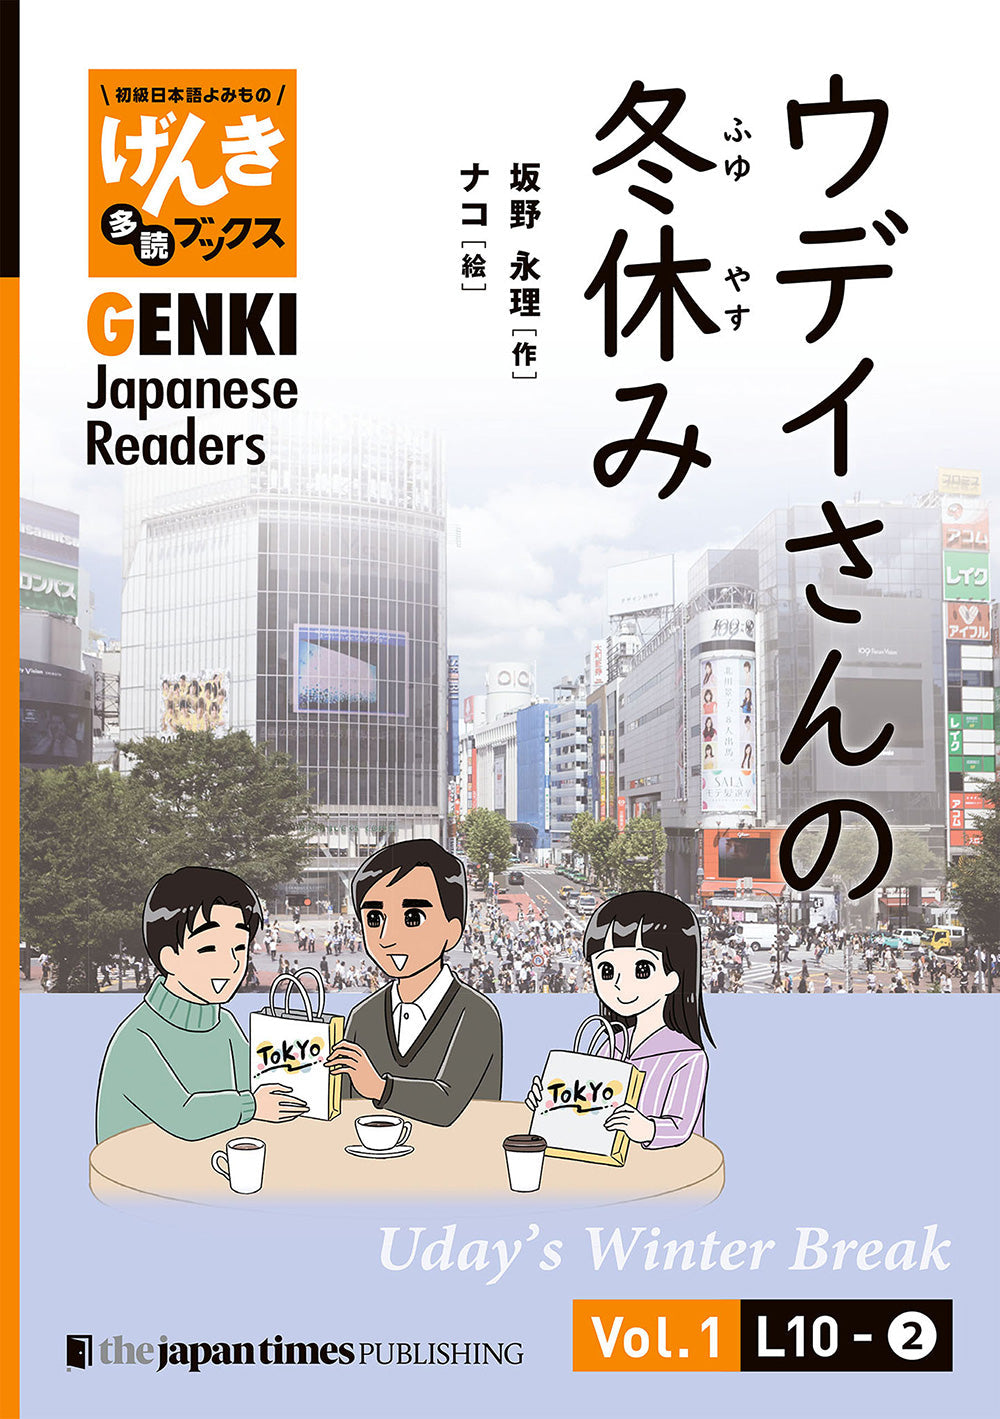 GENKI Japanese Readers Box 2 (L7-L12)